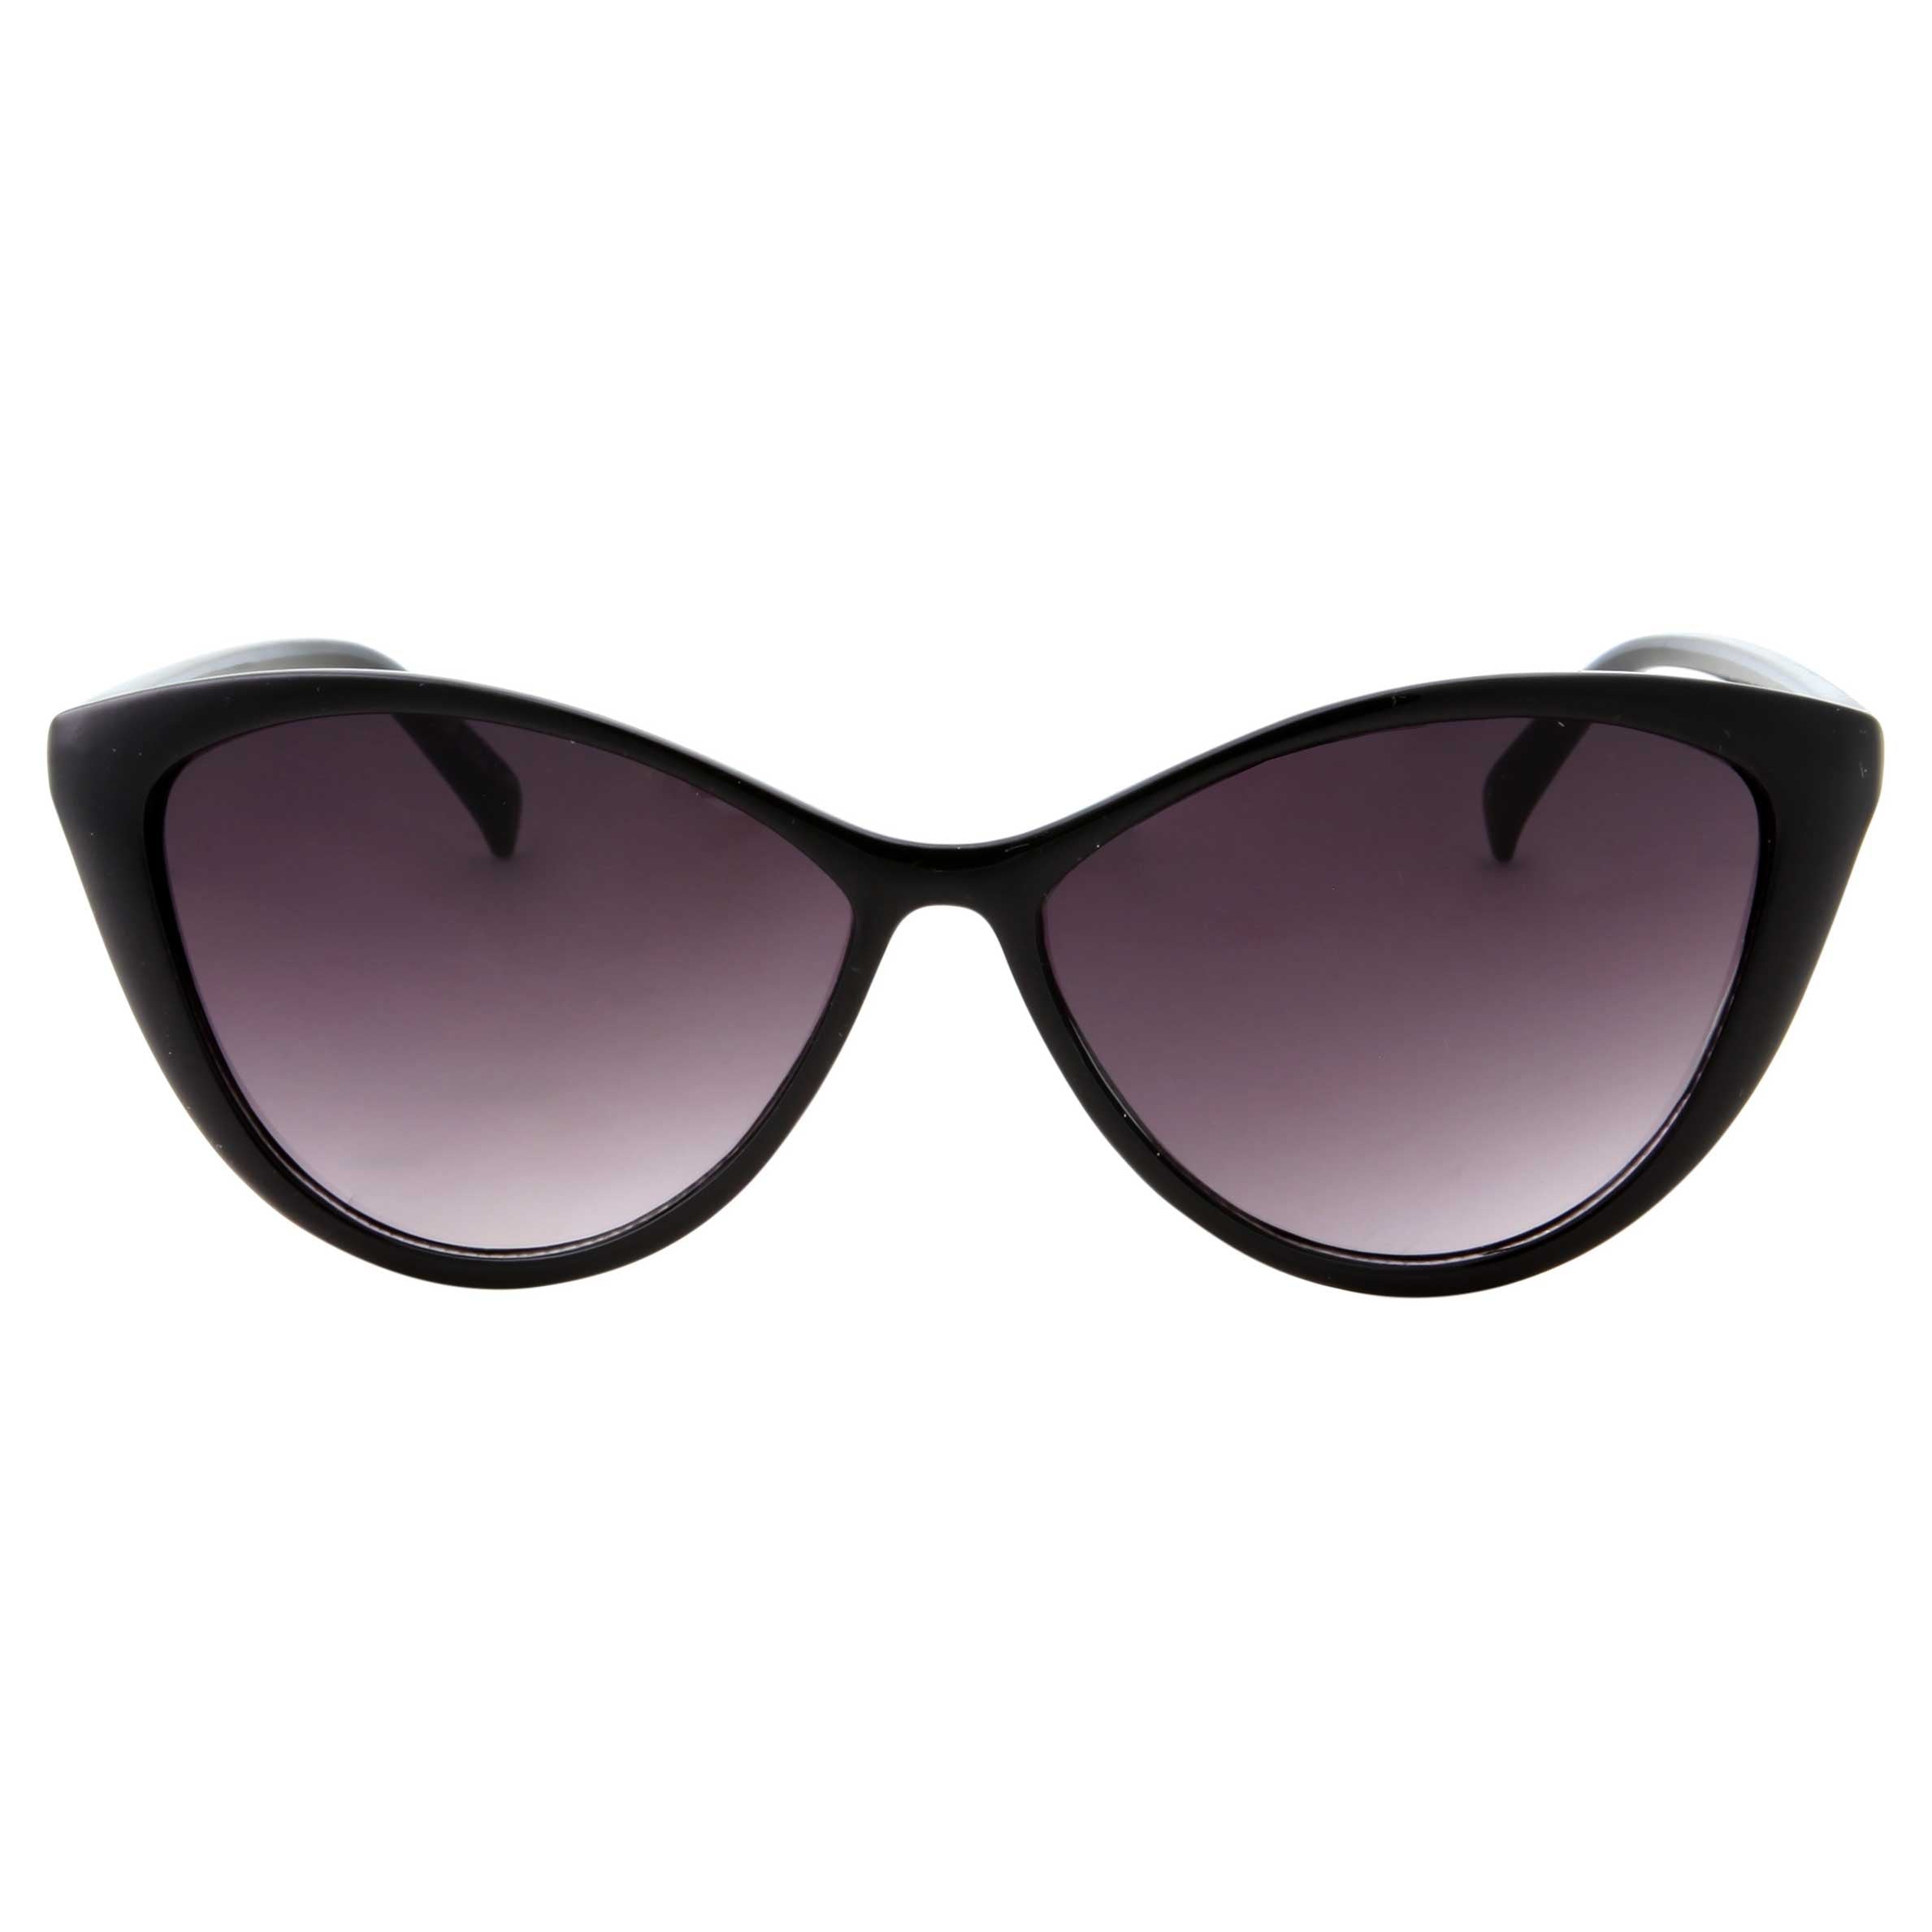 Grinderpunch Cat Eye Sunglasses Thin Frame Vintage Retro For Women 